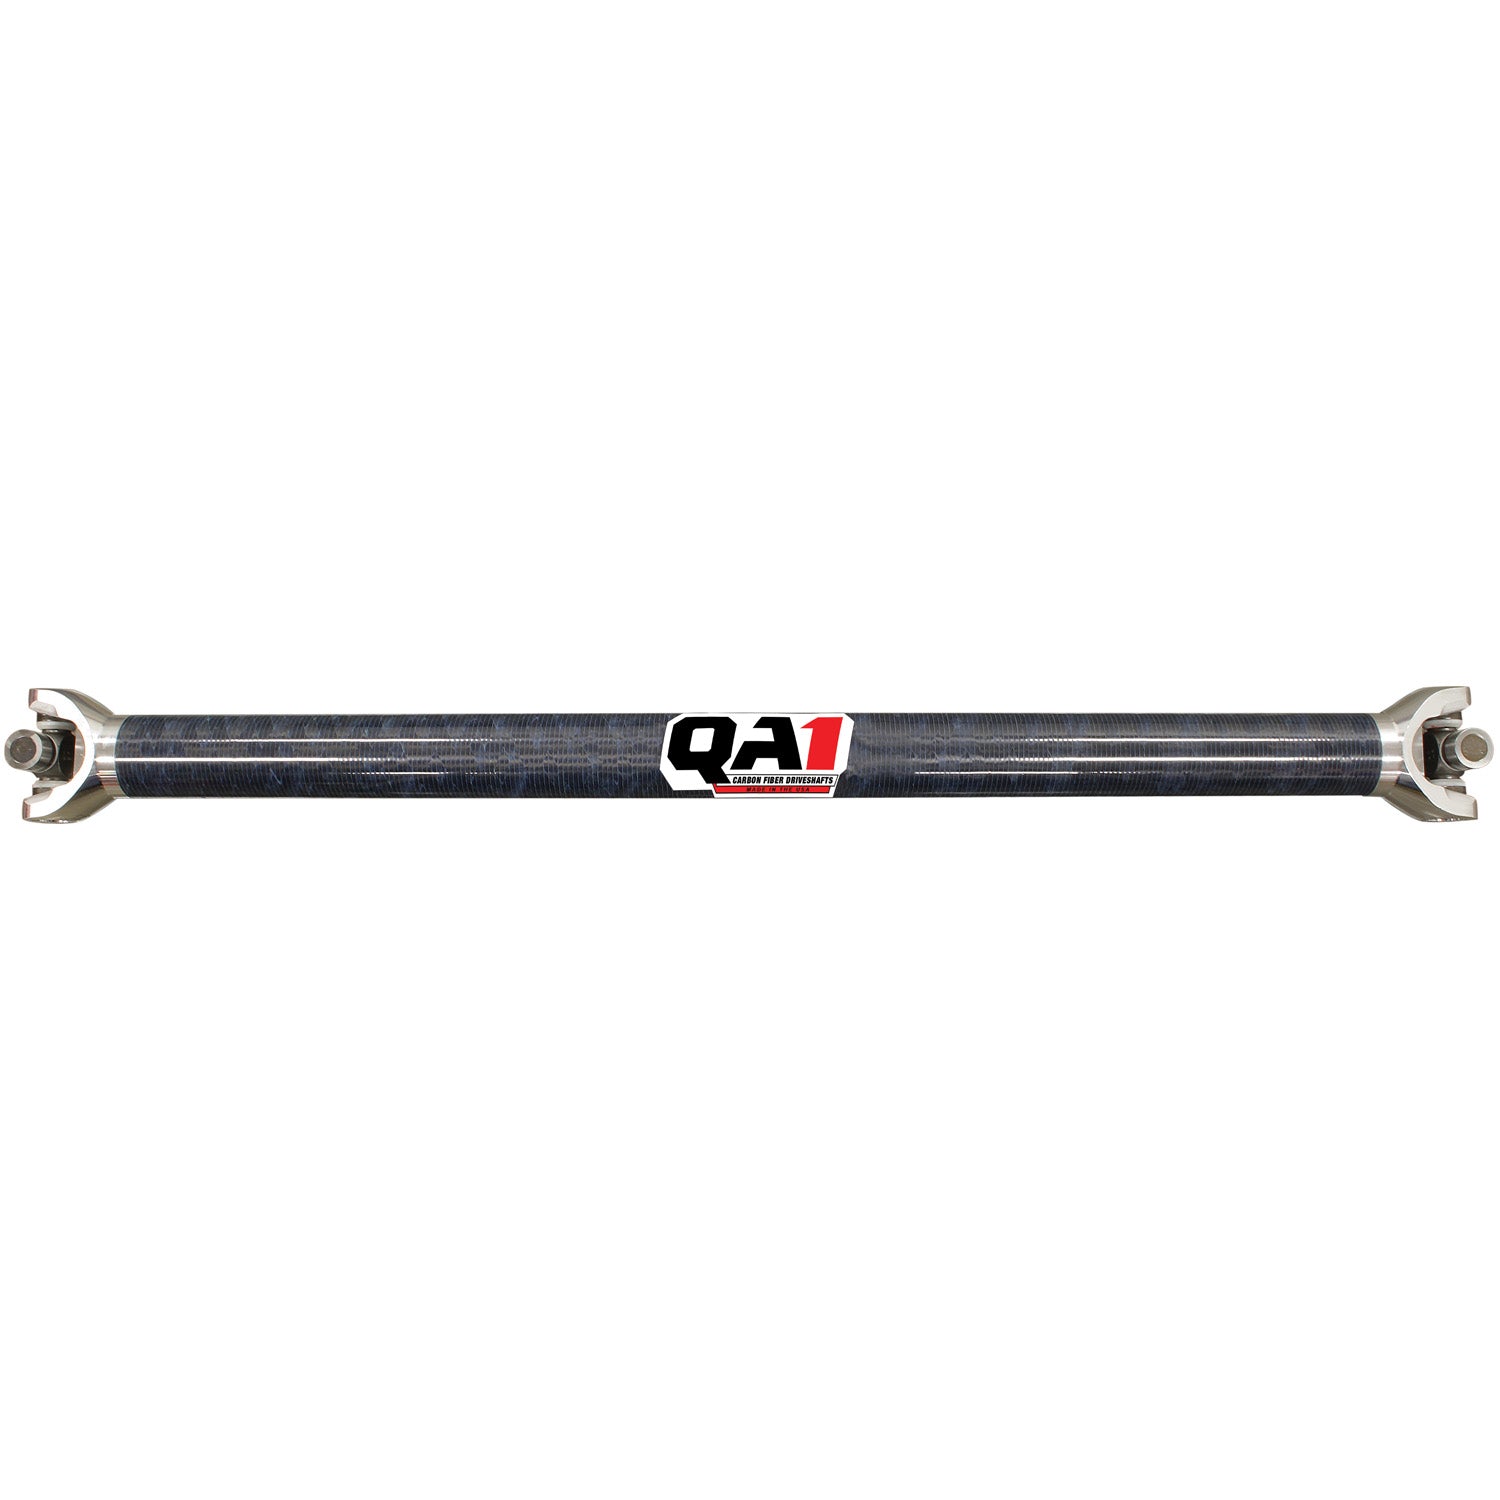 QA1 JJ-11221 Driveshaft, CF, CT-Dirt Cr-Lm, 38.00 inch 2.3 inch, 1310 U-Joint, 1500Lb.